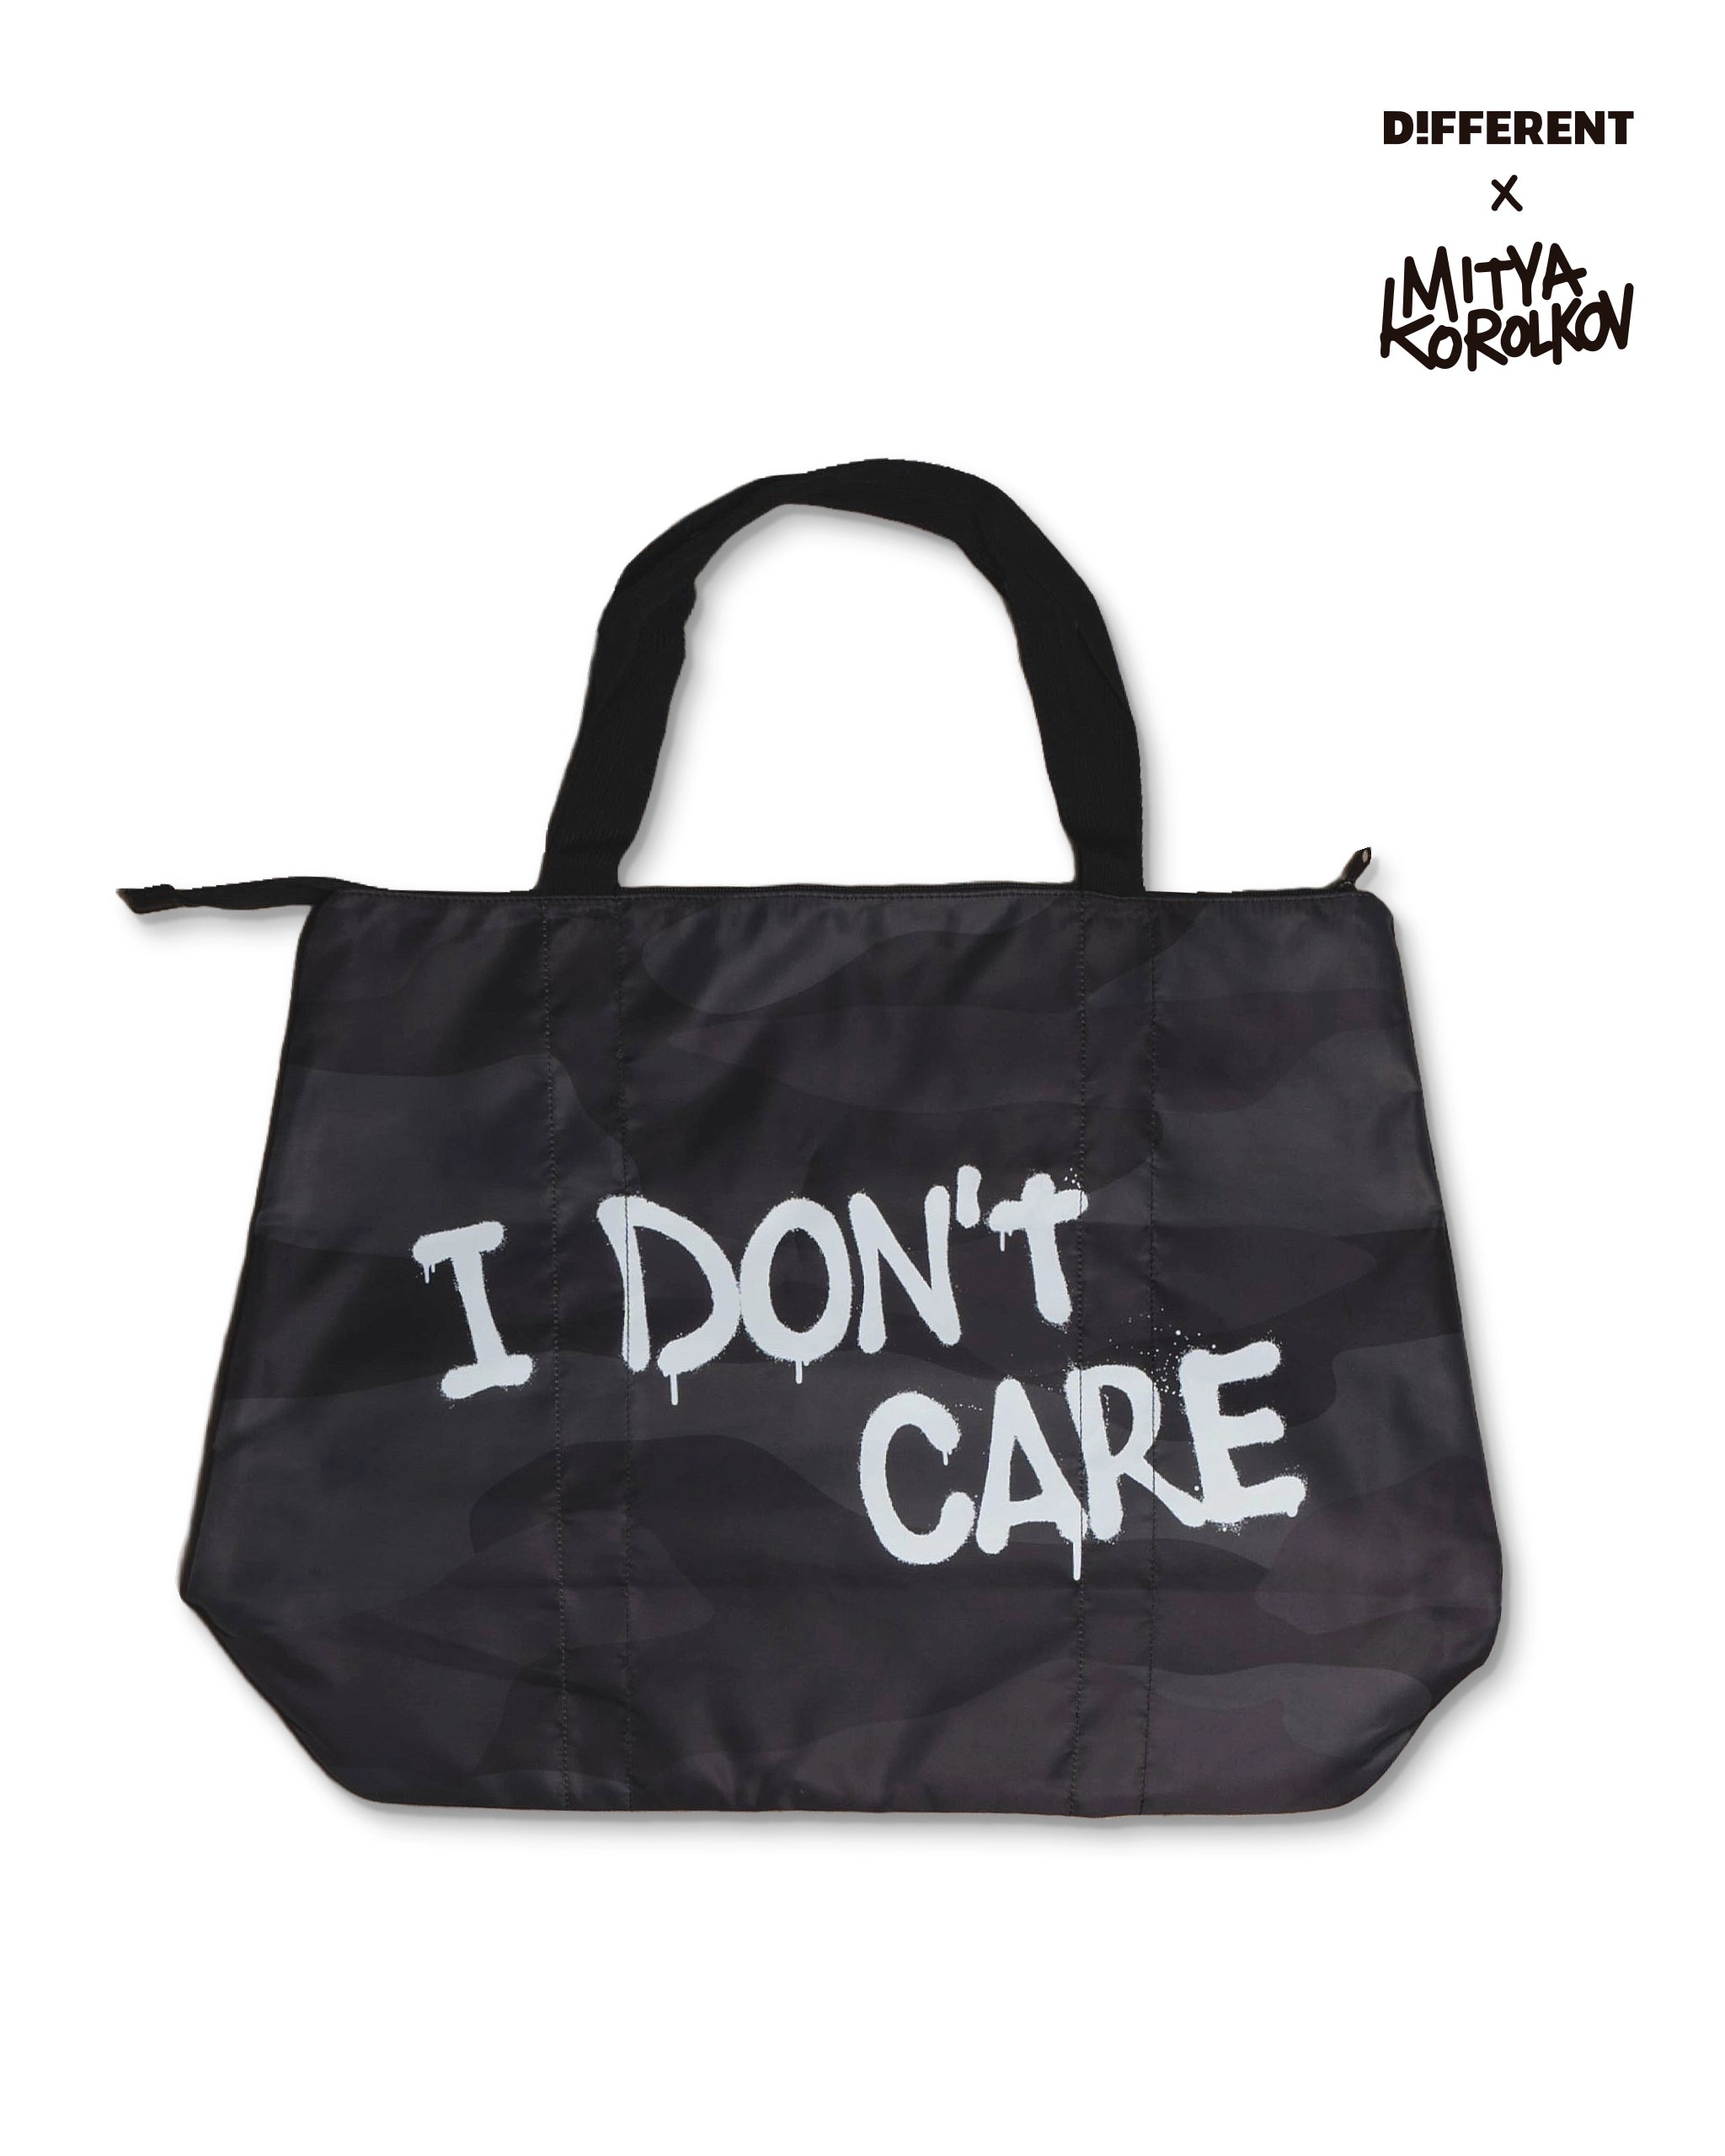 I DON'T CARE BAG